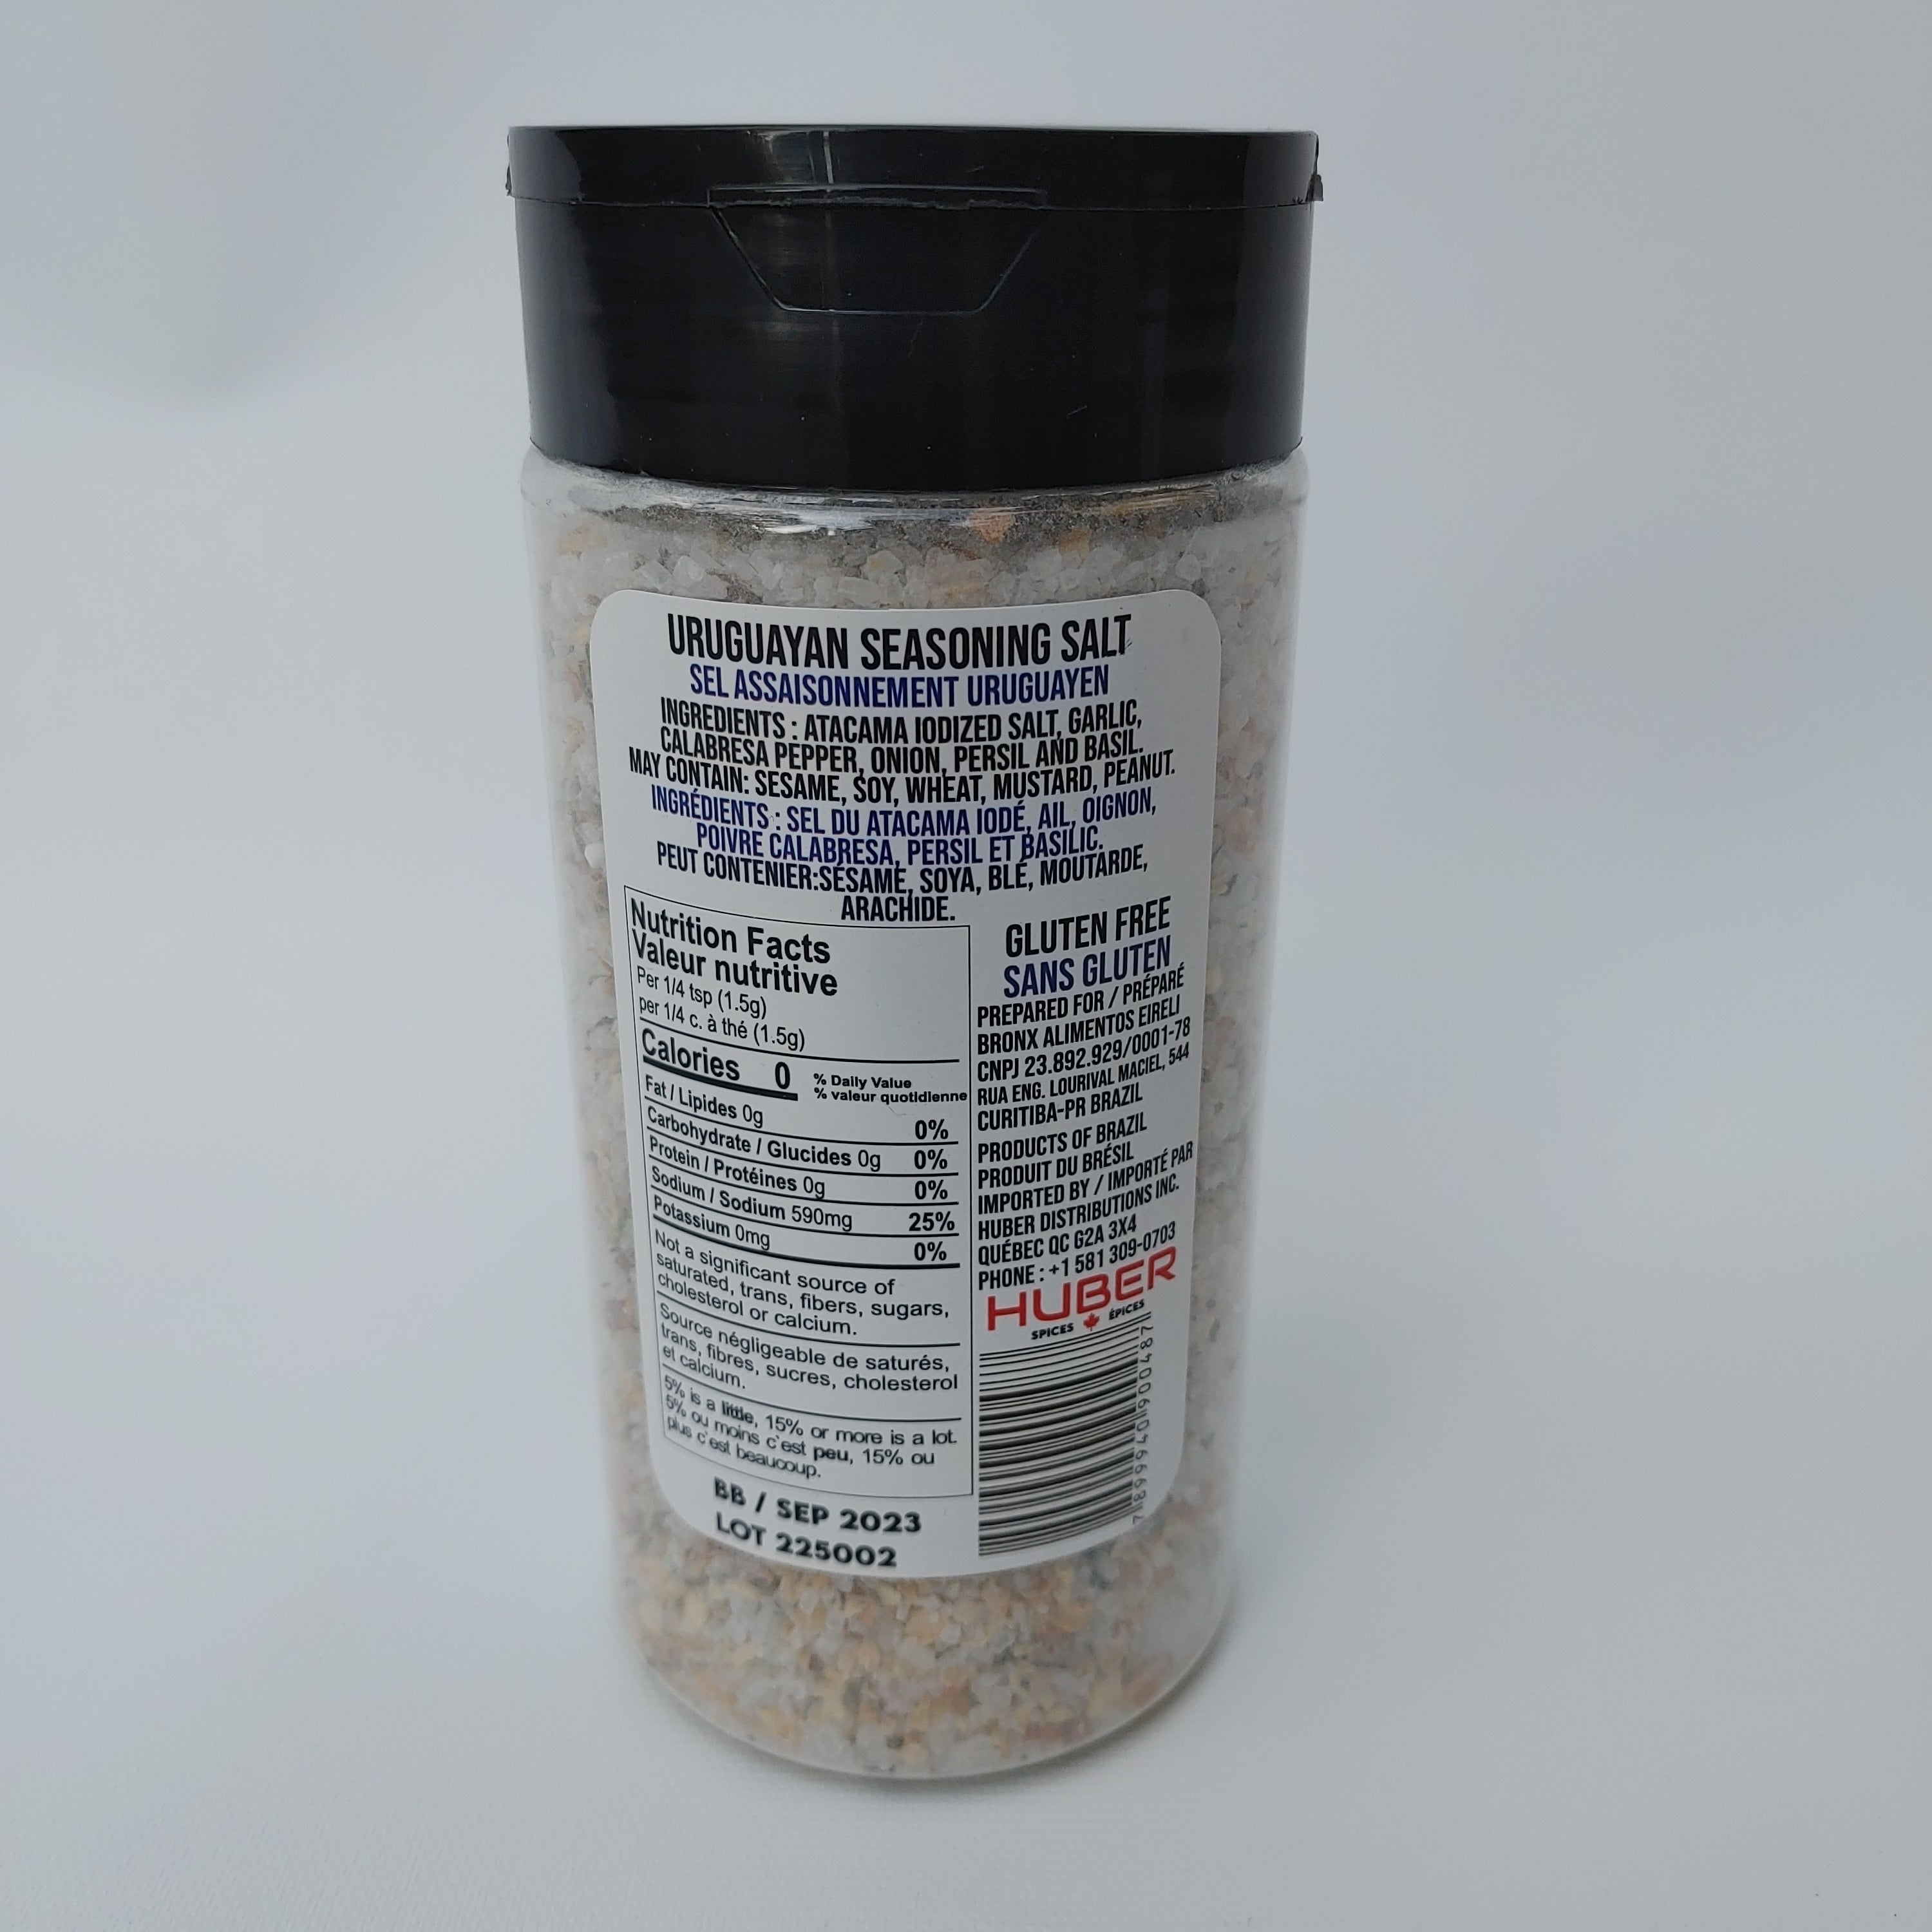 HUBER - Salt Uruguayan Seasoning - FINAL SALE - EXPIRED or CLOSE TO EXPIRY